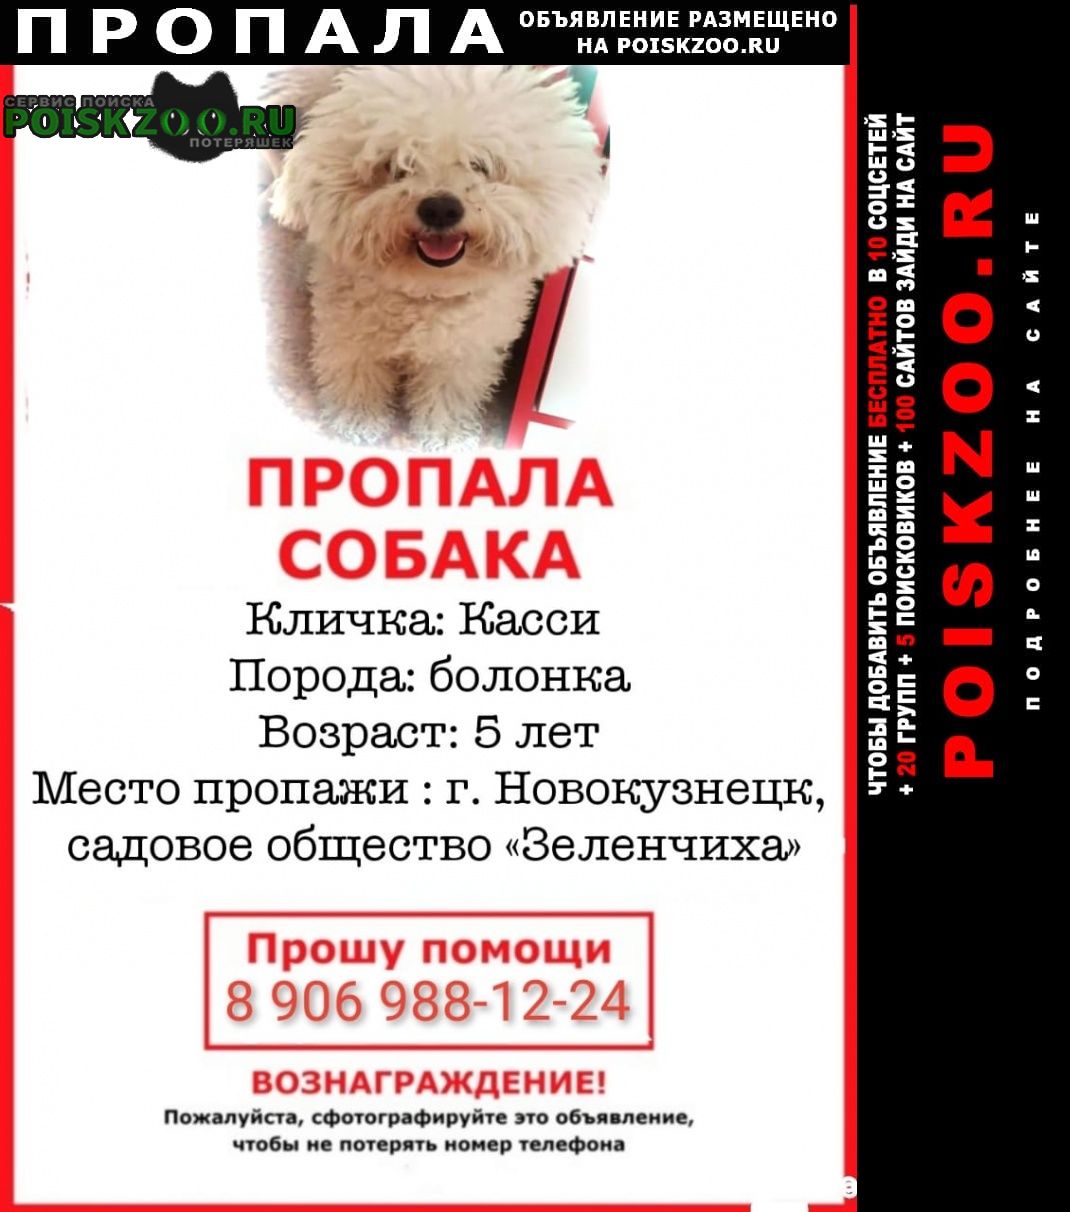 Пропала собака болонка девочка Новокузнецк